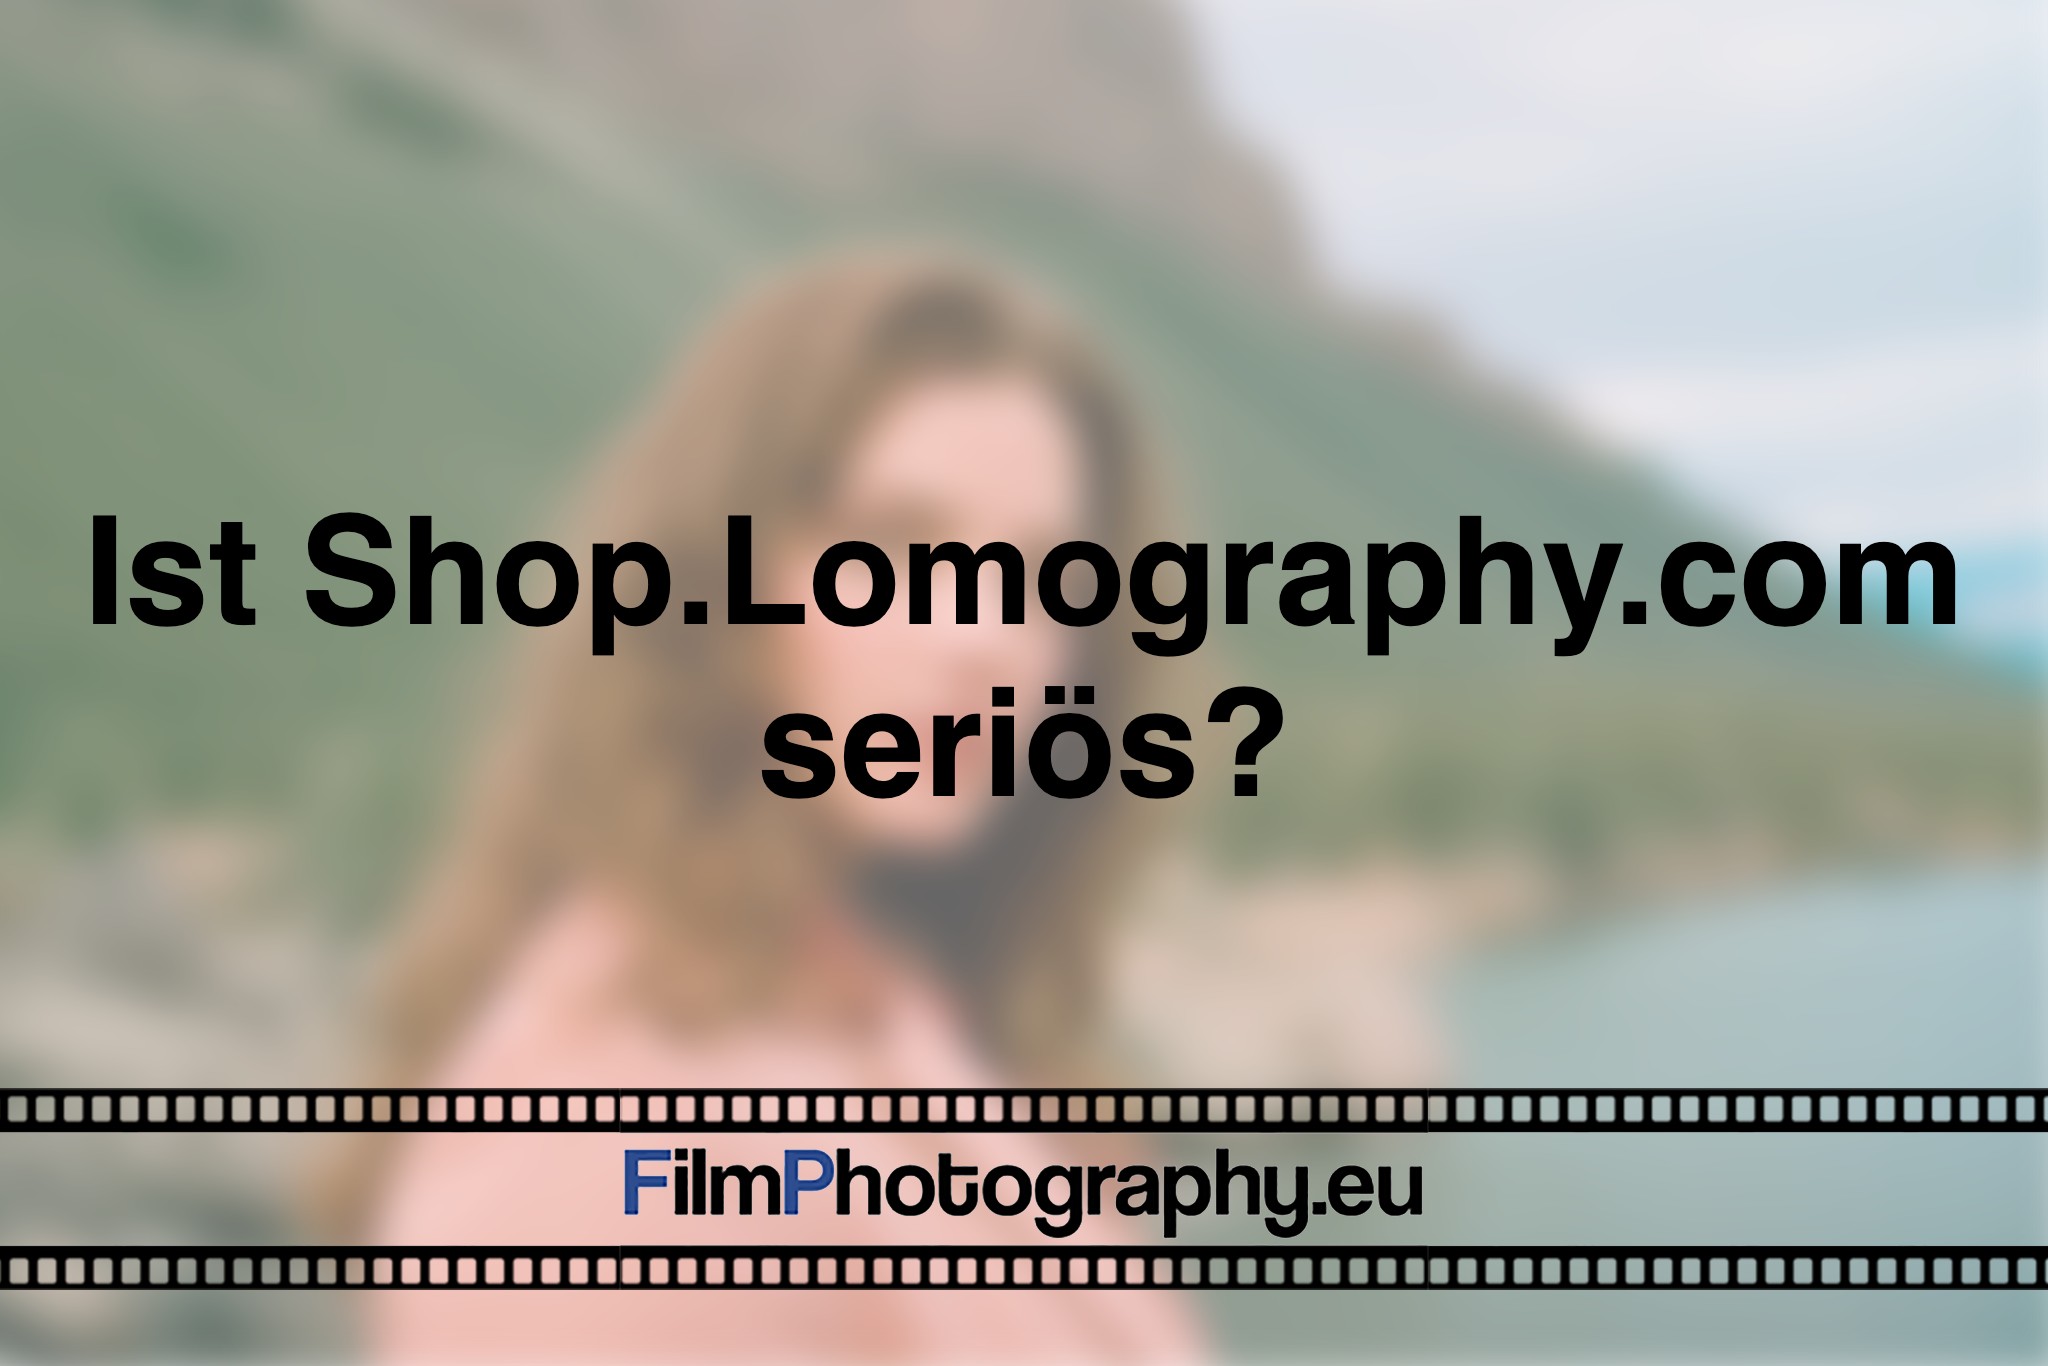 ist-shop-lomography-com-serioes-photo-bnv